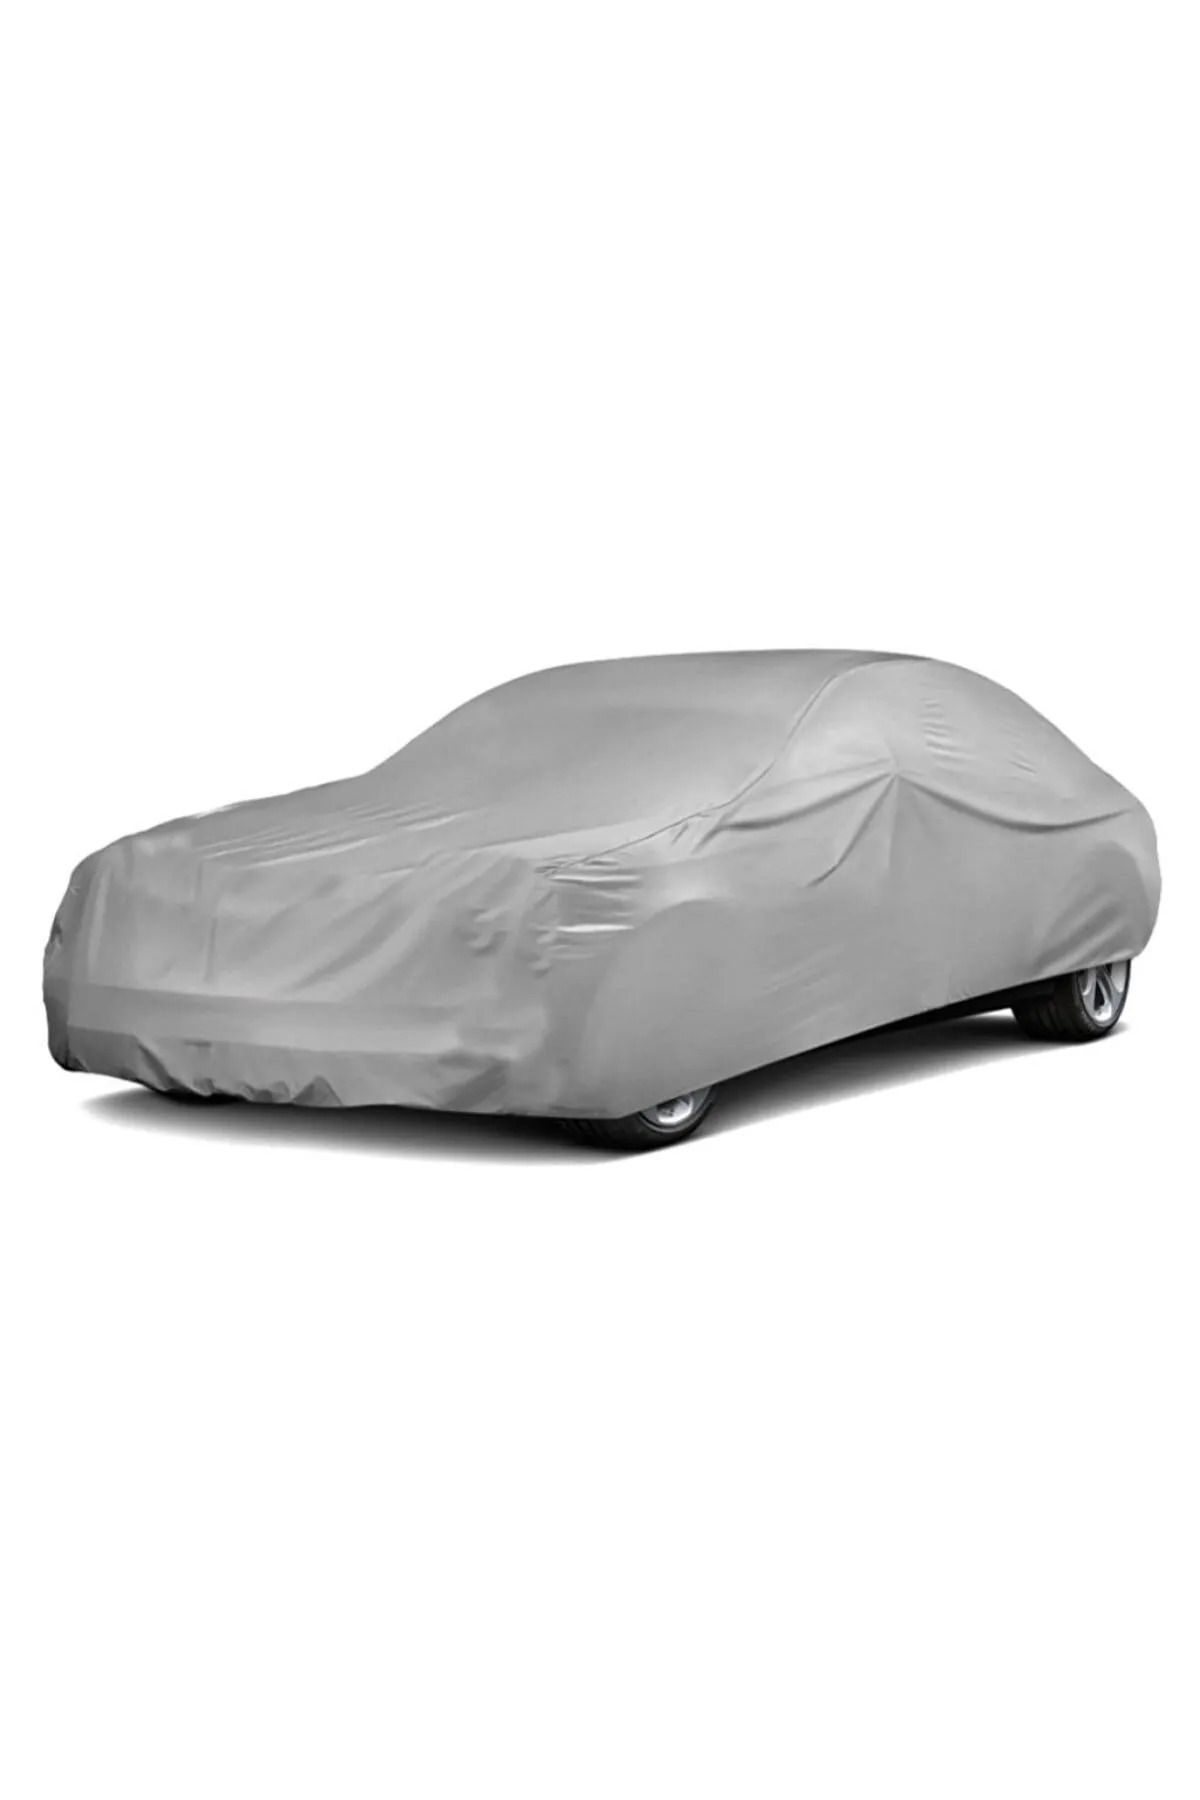 PlusOto Skoda Karoq Compatible Car Tarpaulin, Vehicle Cover, Tent